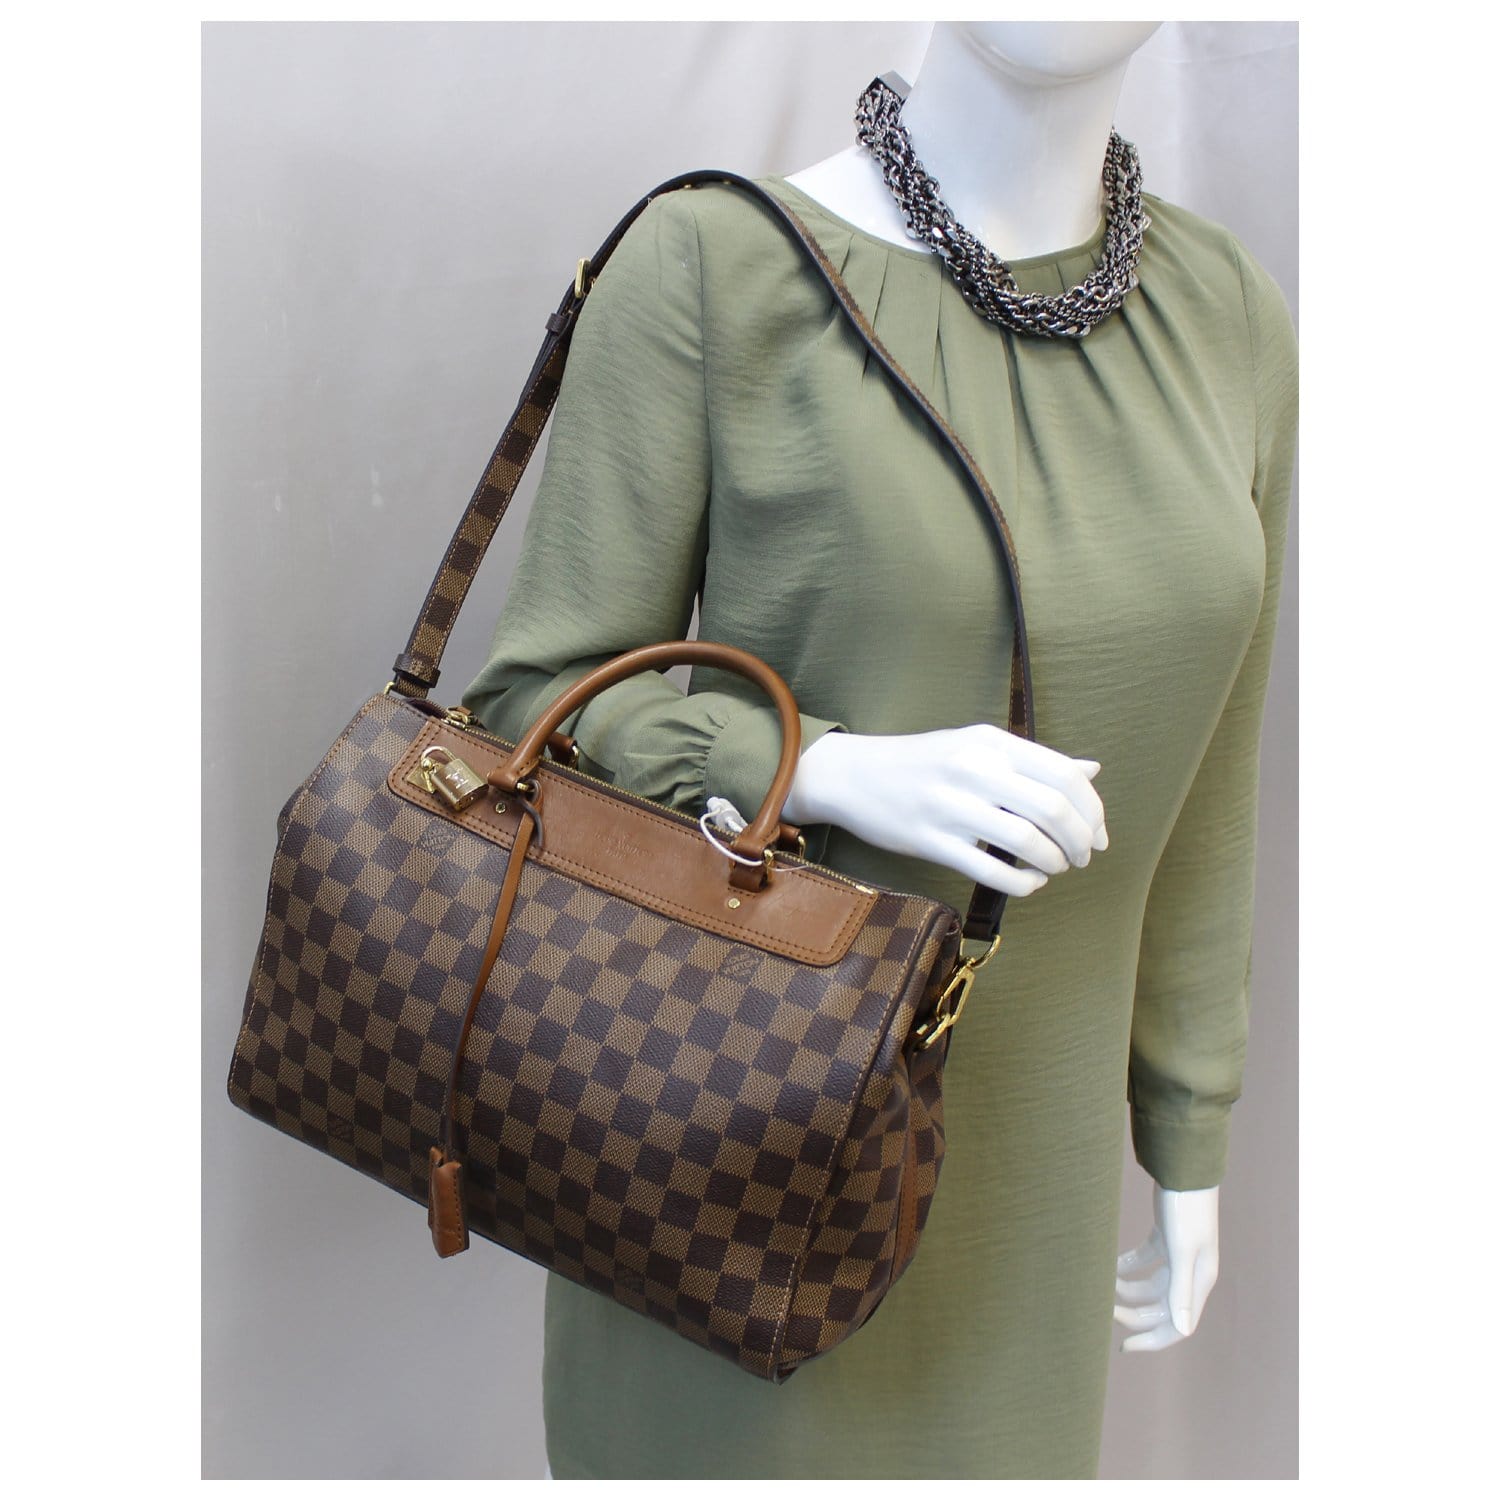 Louis Vuitton Greenwich Shoulder bag 358302